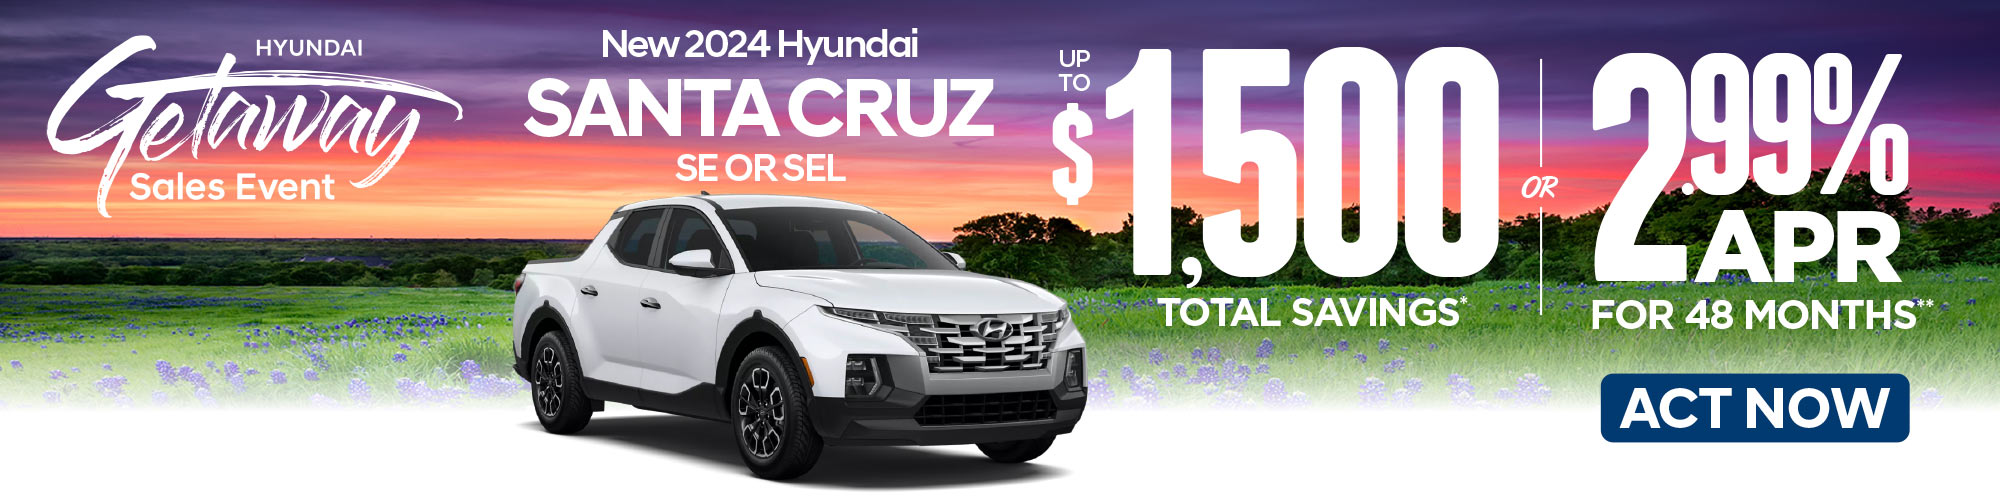 New 2023 Hyundai Santa Cruz 3.9% APR - ACT NOW